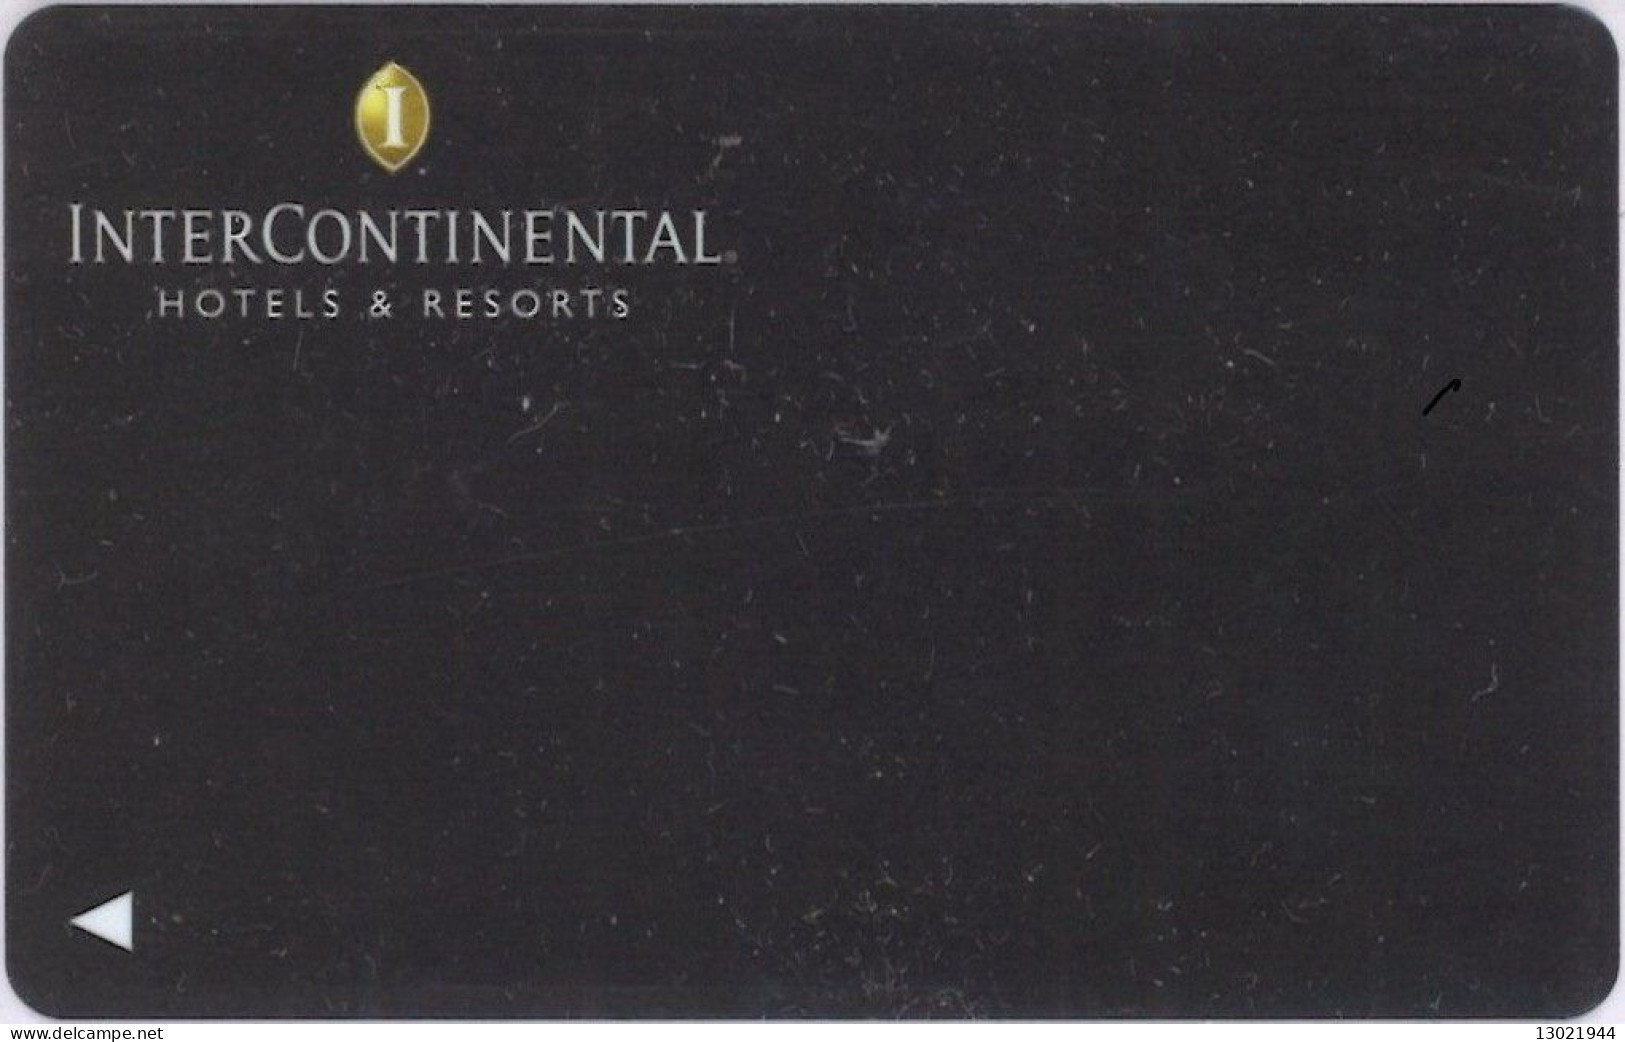 STATI UNITI  KEY HOTEL   InterContinental Hotels & Resorts - Hotel Keycards